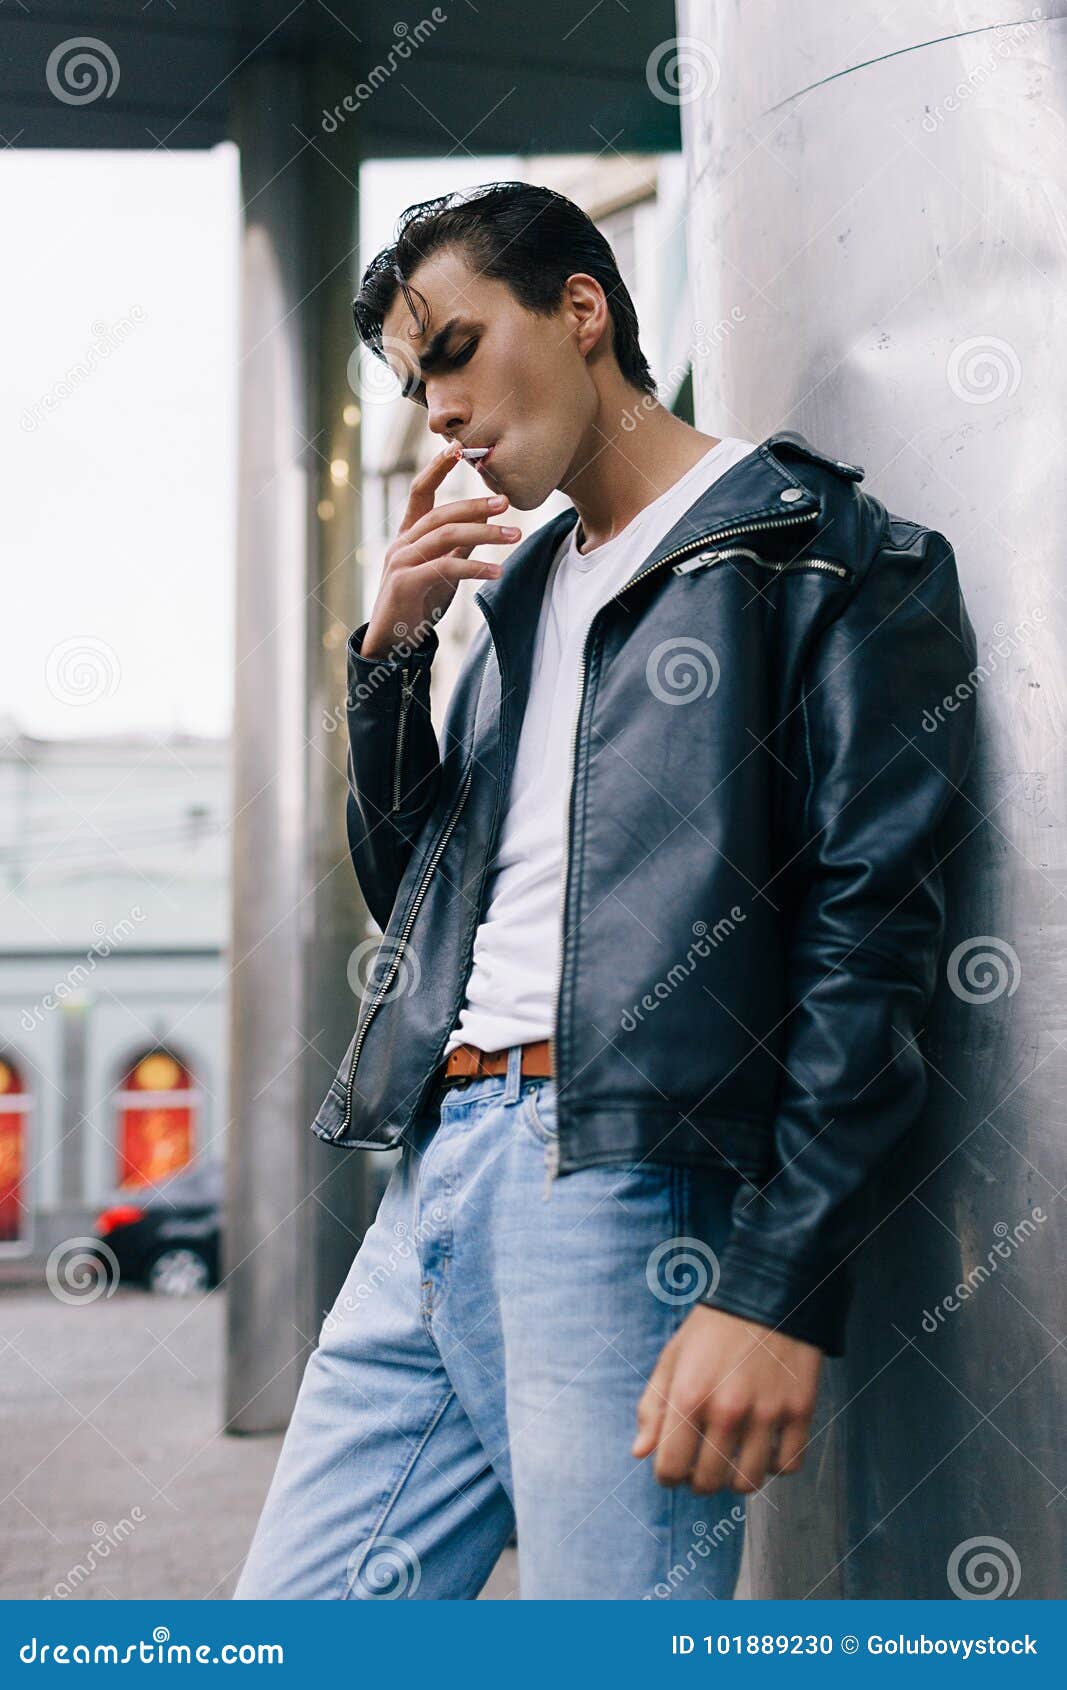 Confident Fashion Bad Boy Smoking Addiction Stock Photo - Image of cool,  outdoors: 101889230